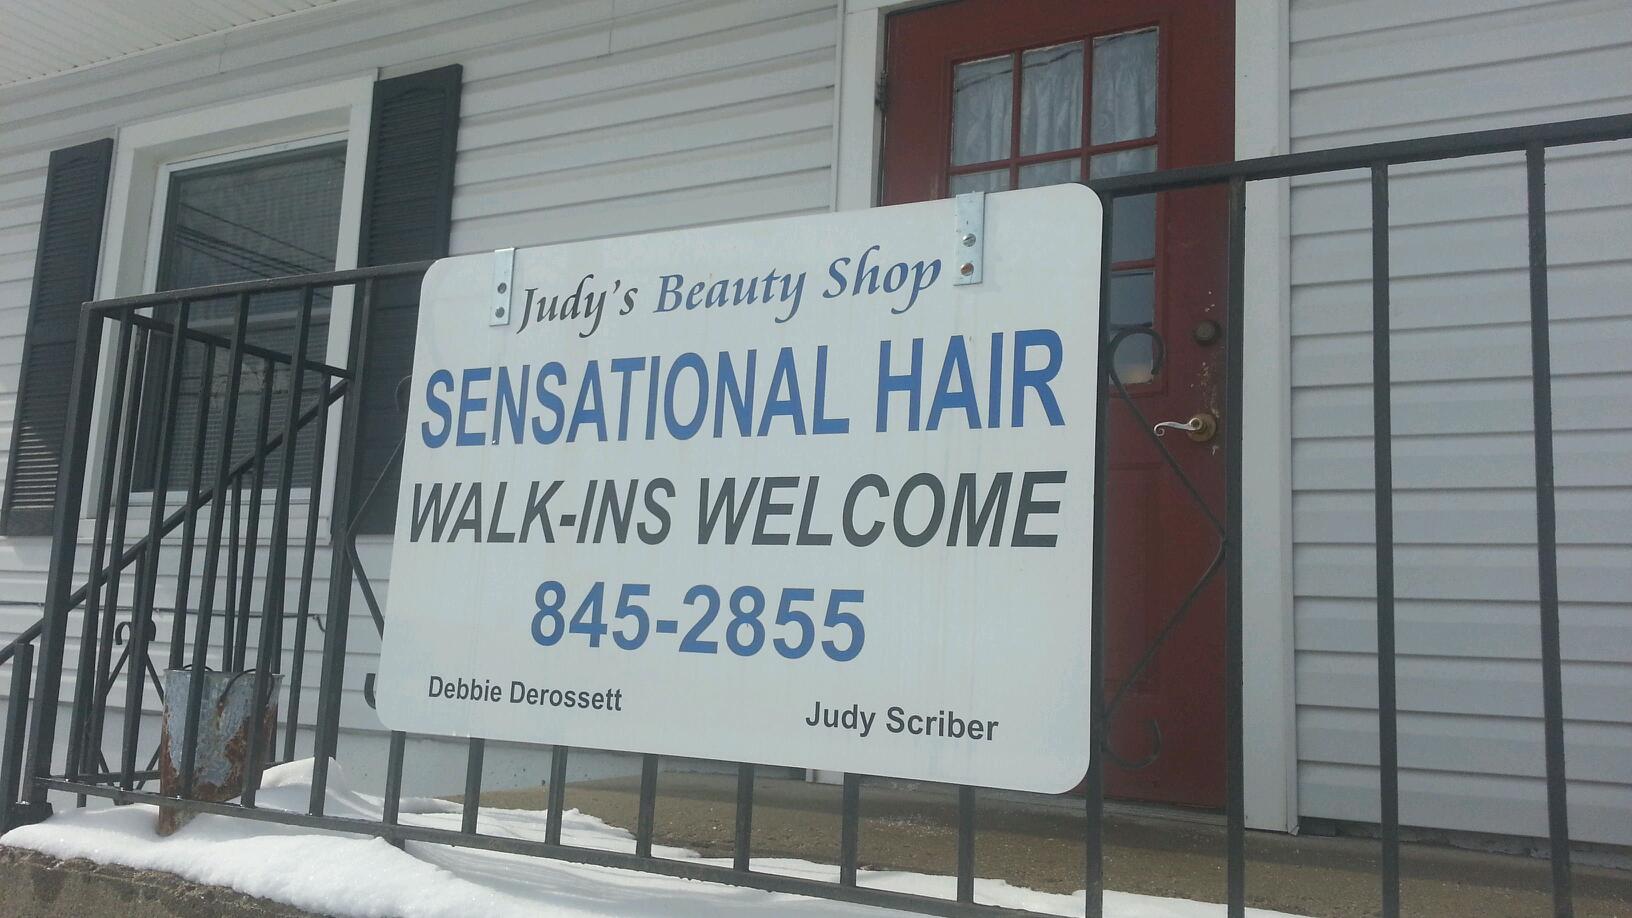 Judy's Beauty Salon 31 S Property Rd, New Castle Kentucky 40050